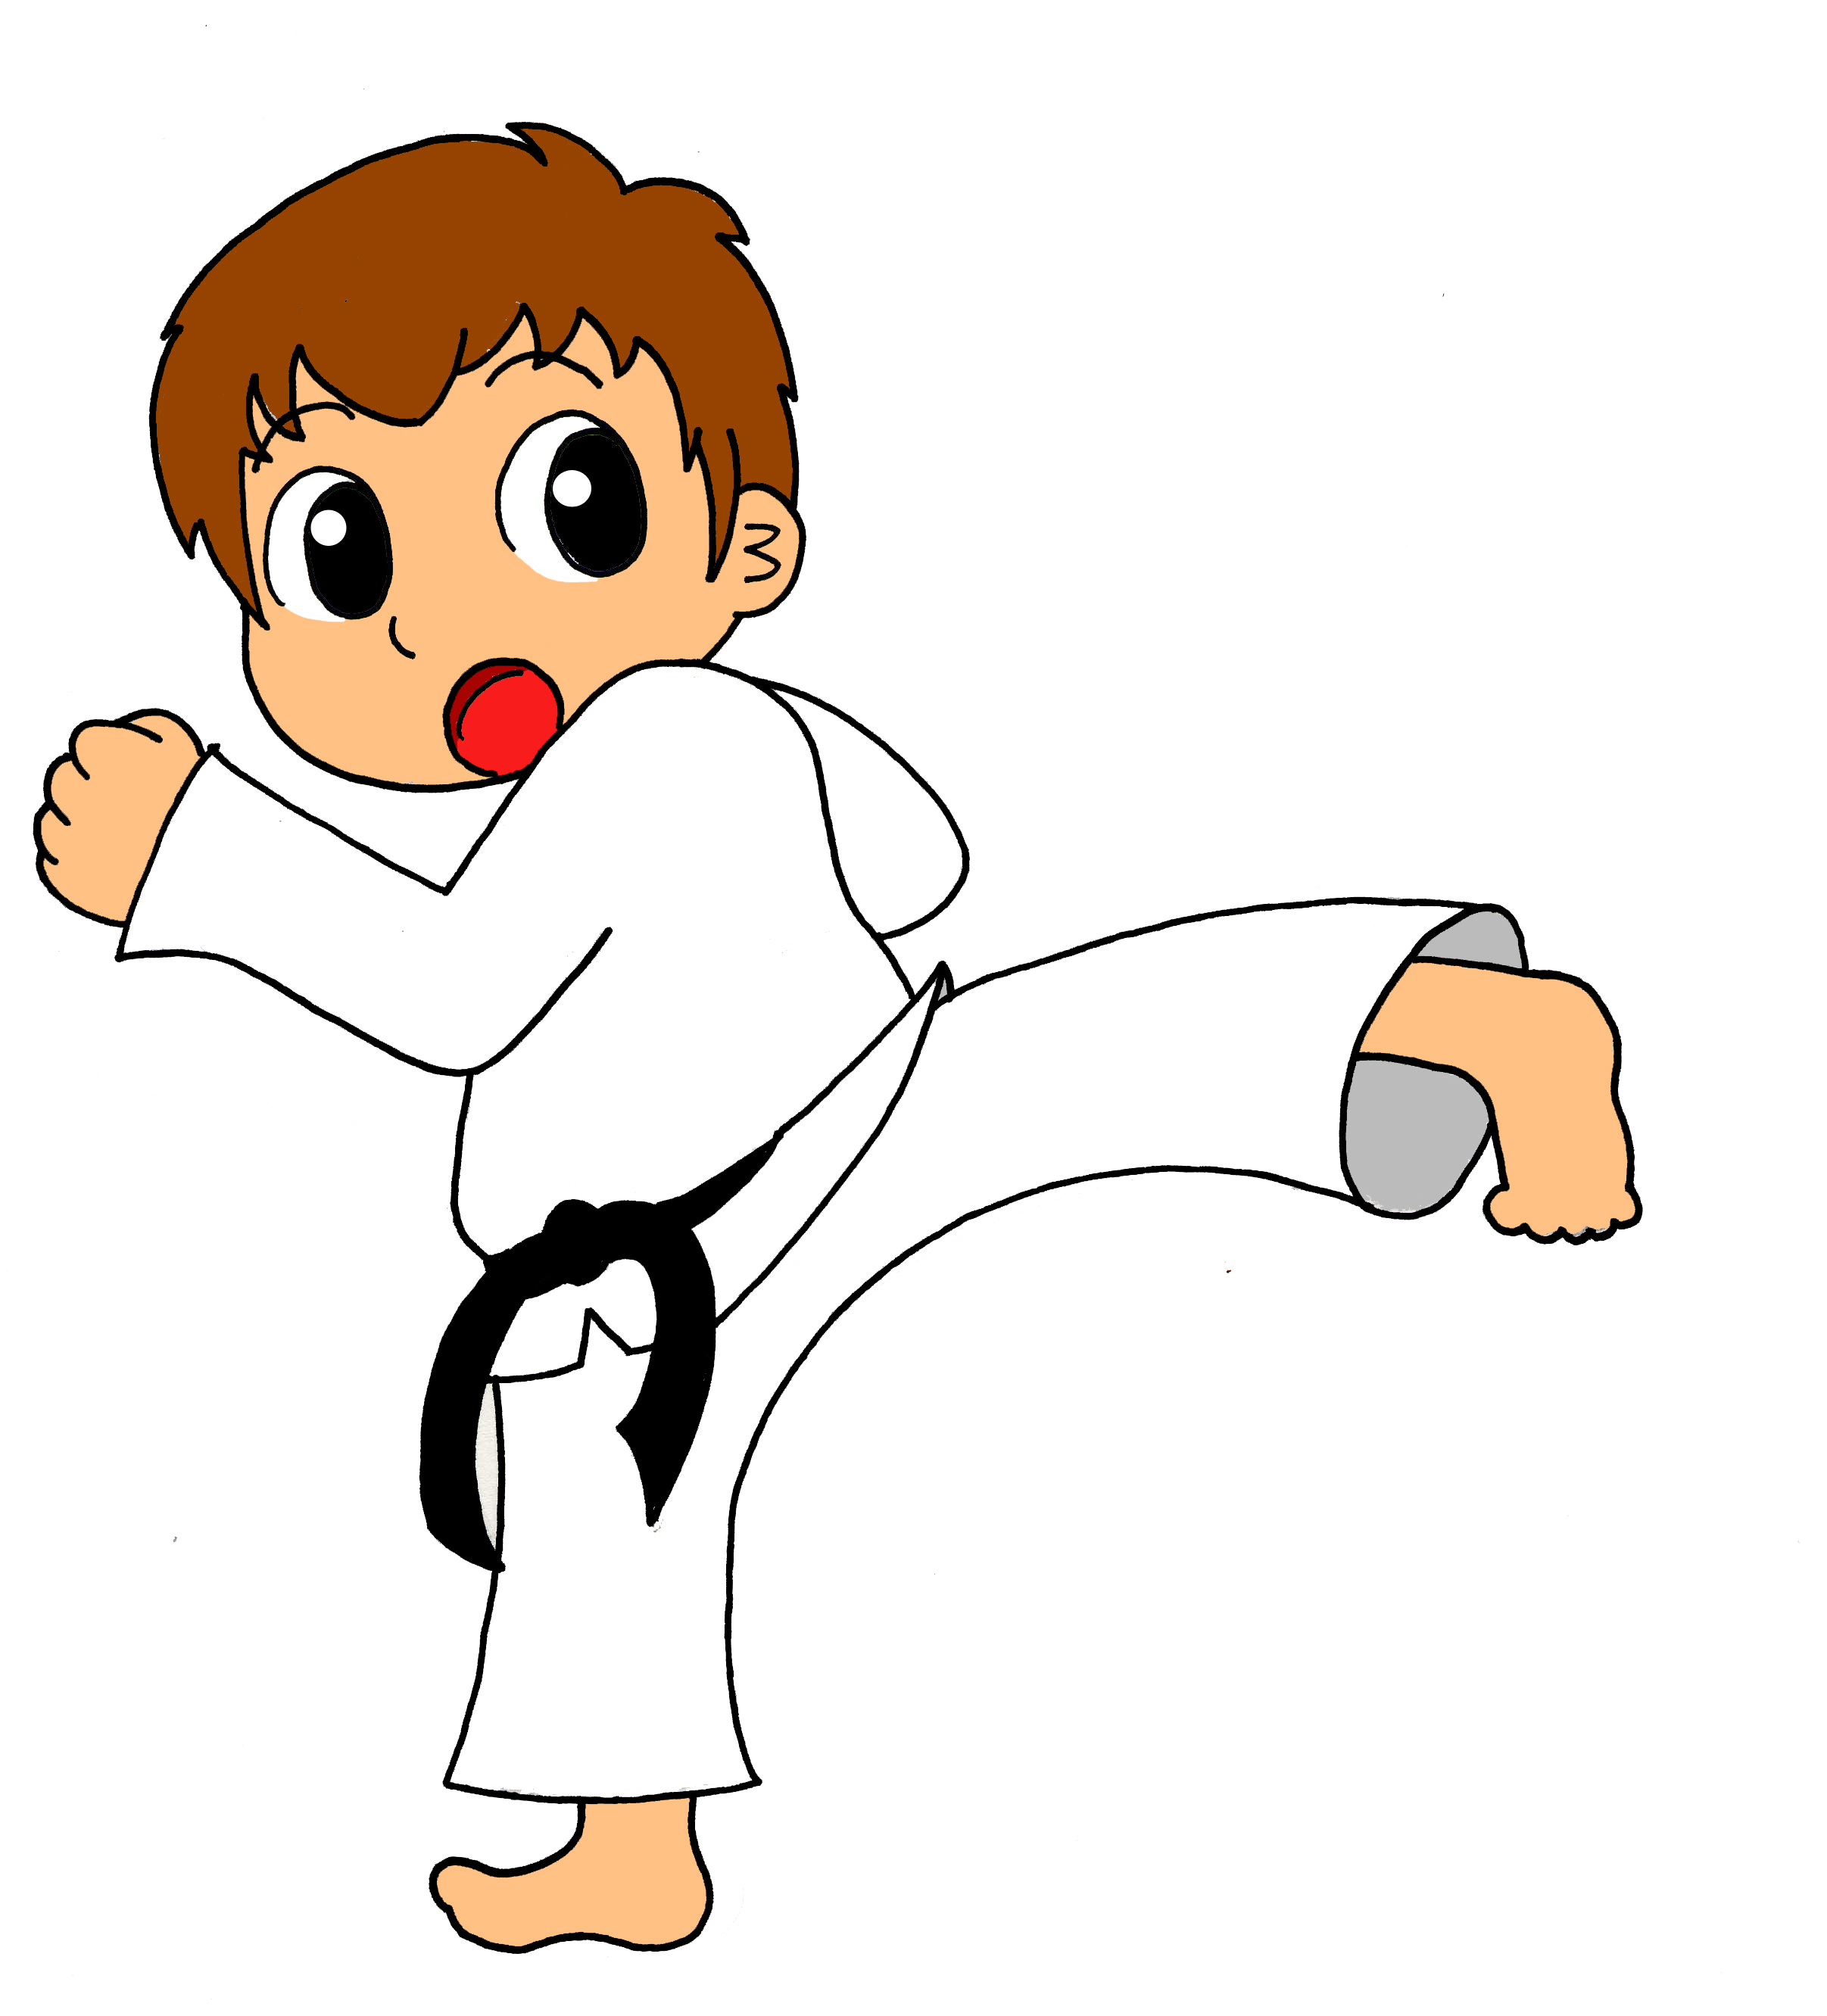 Karate-do clipart - Clipground